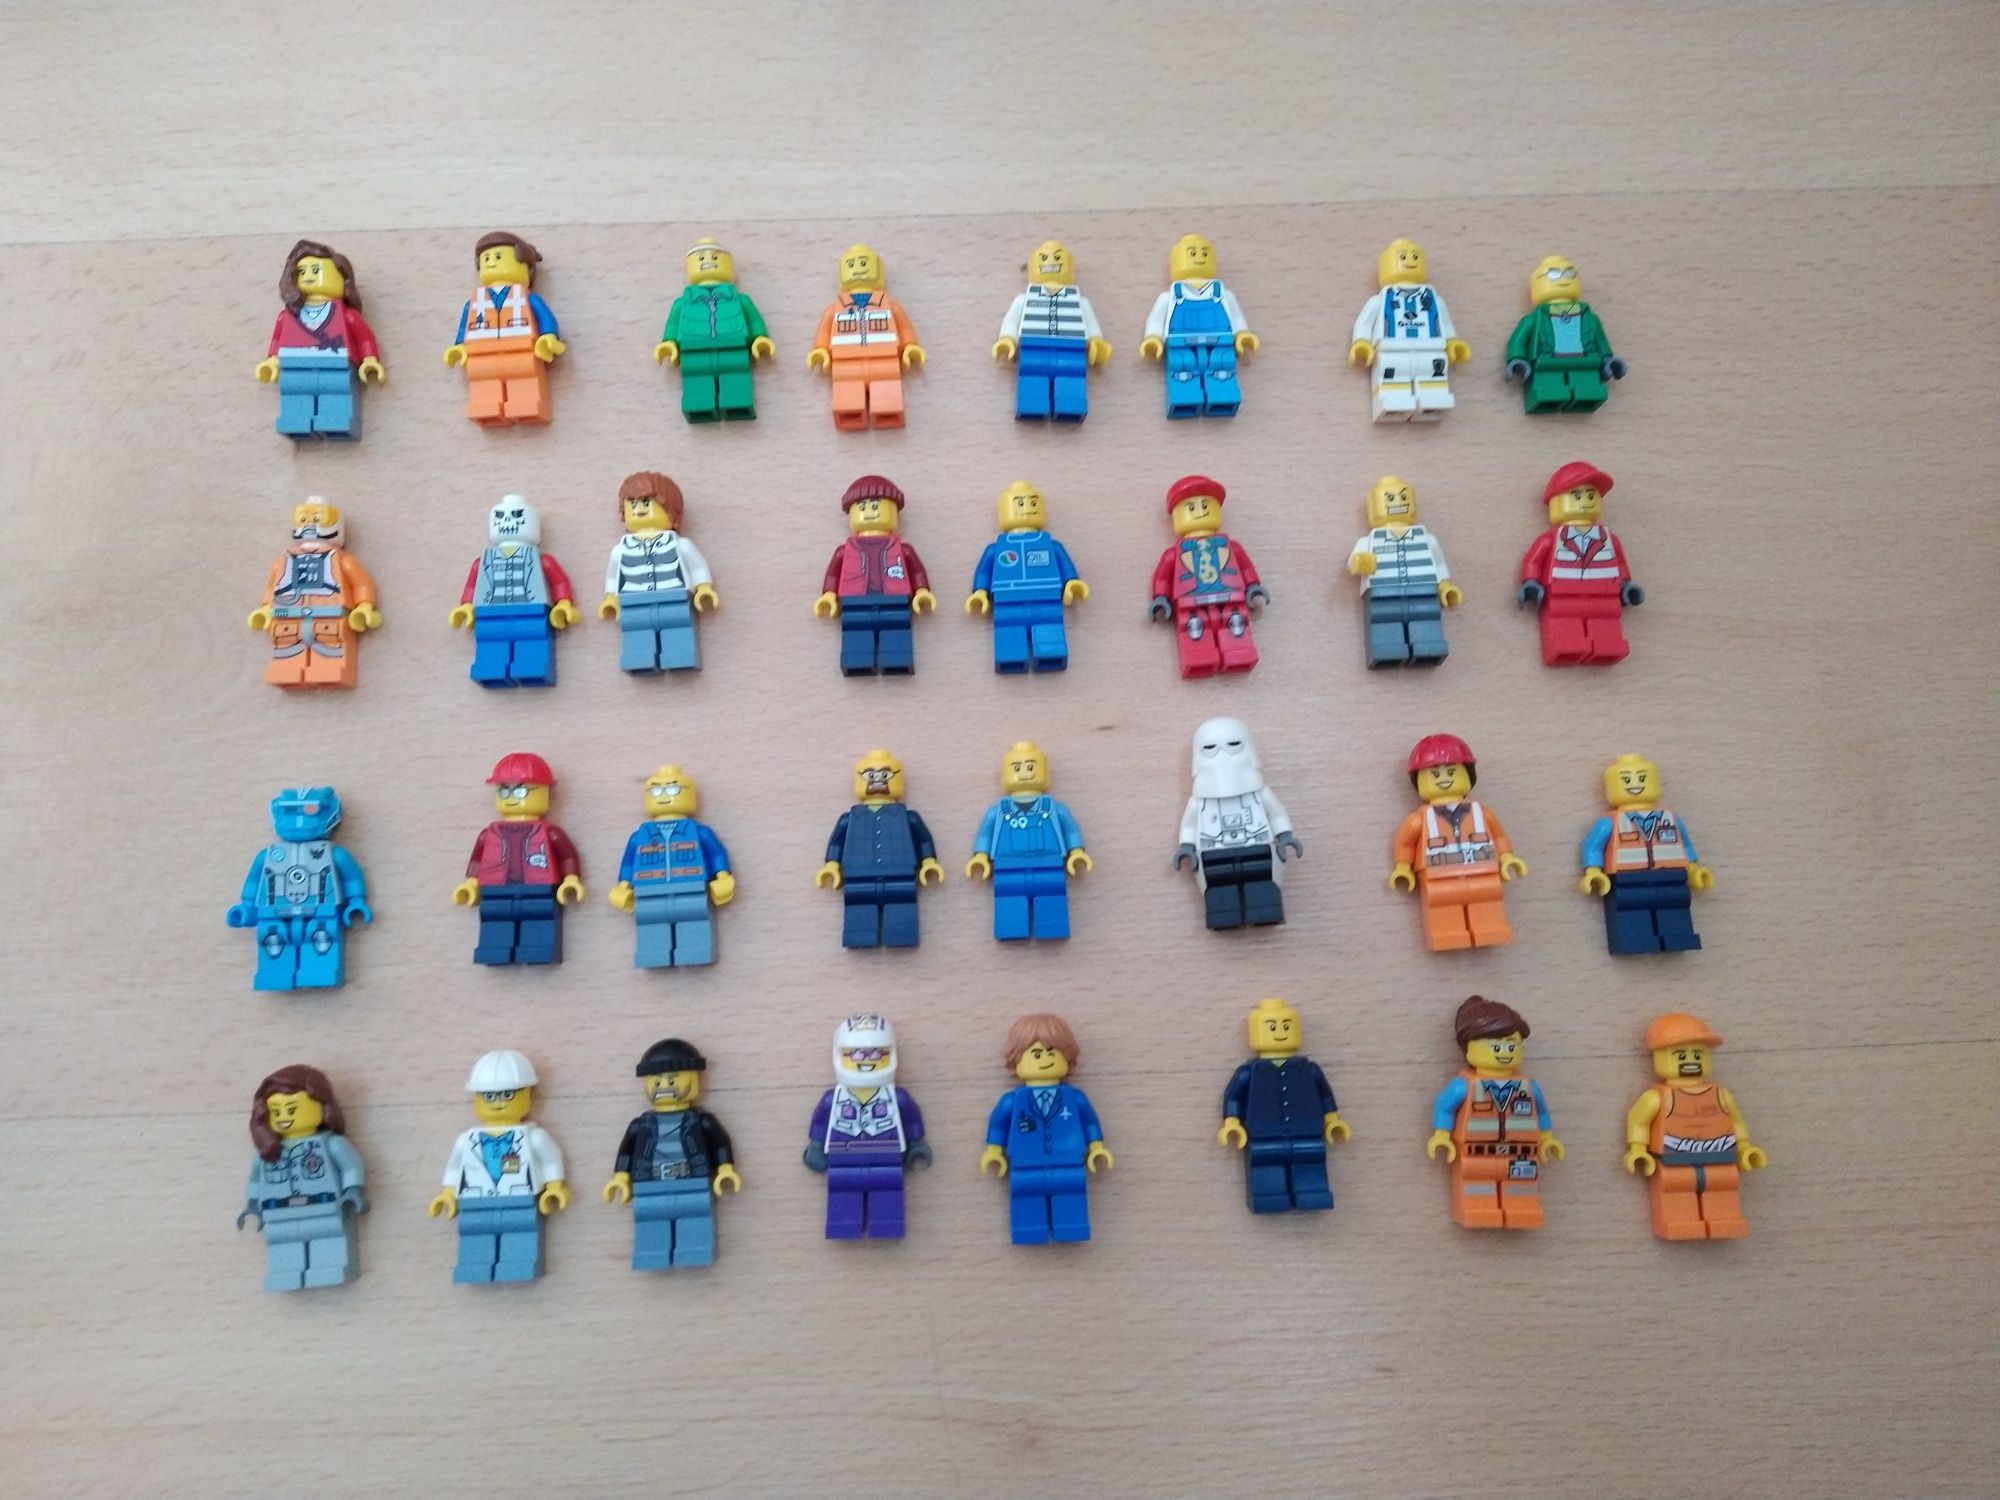 Caixa conjunto de minifiguras LEGO, acessórios diversos e motas